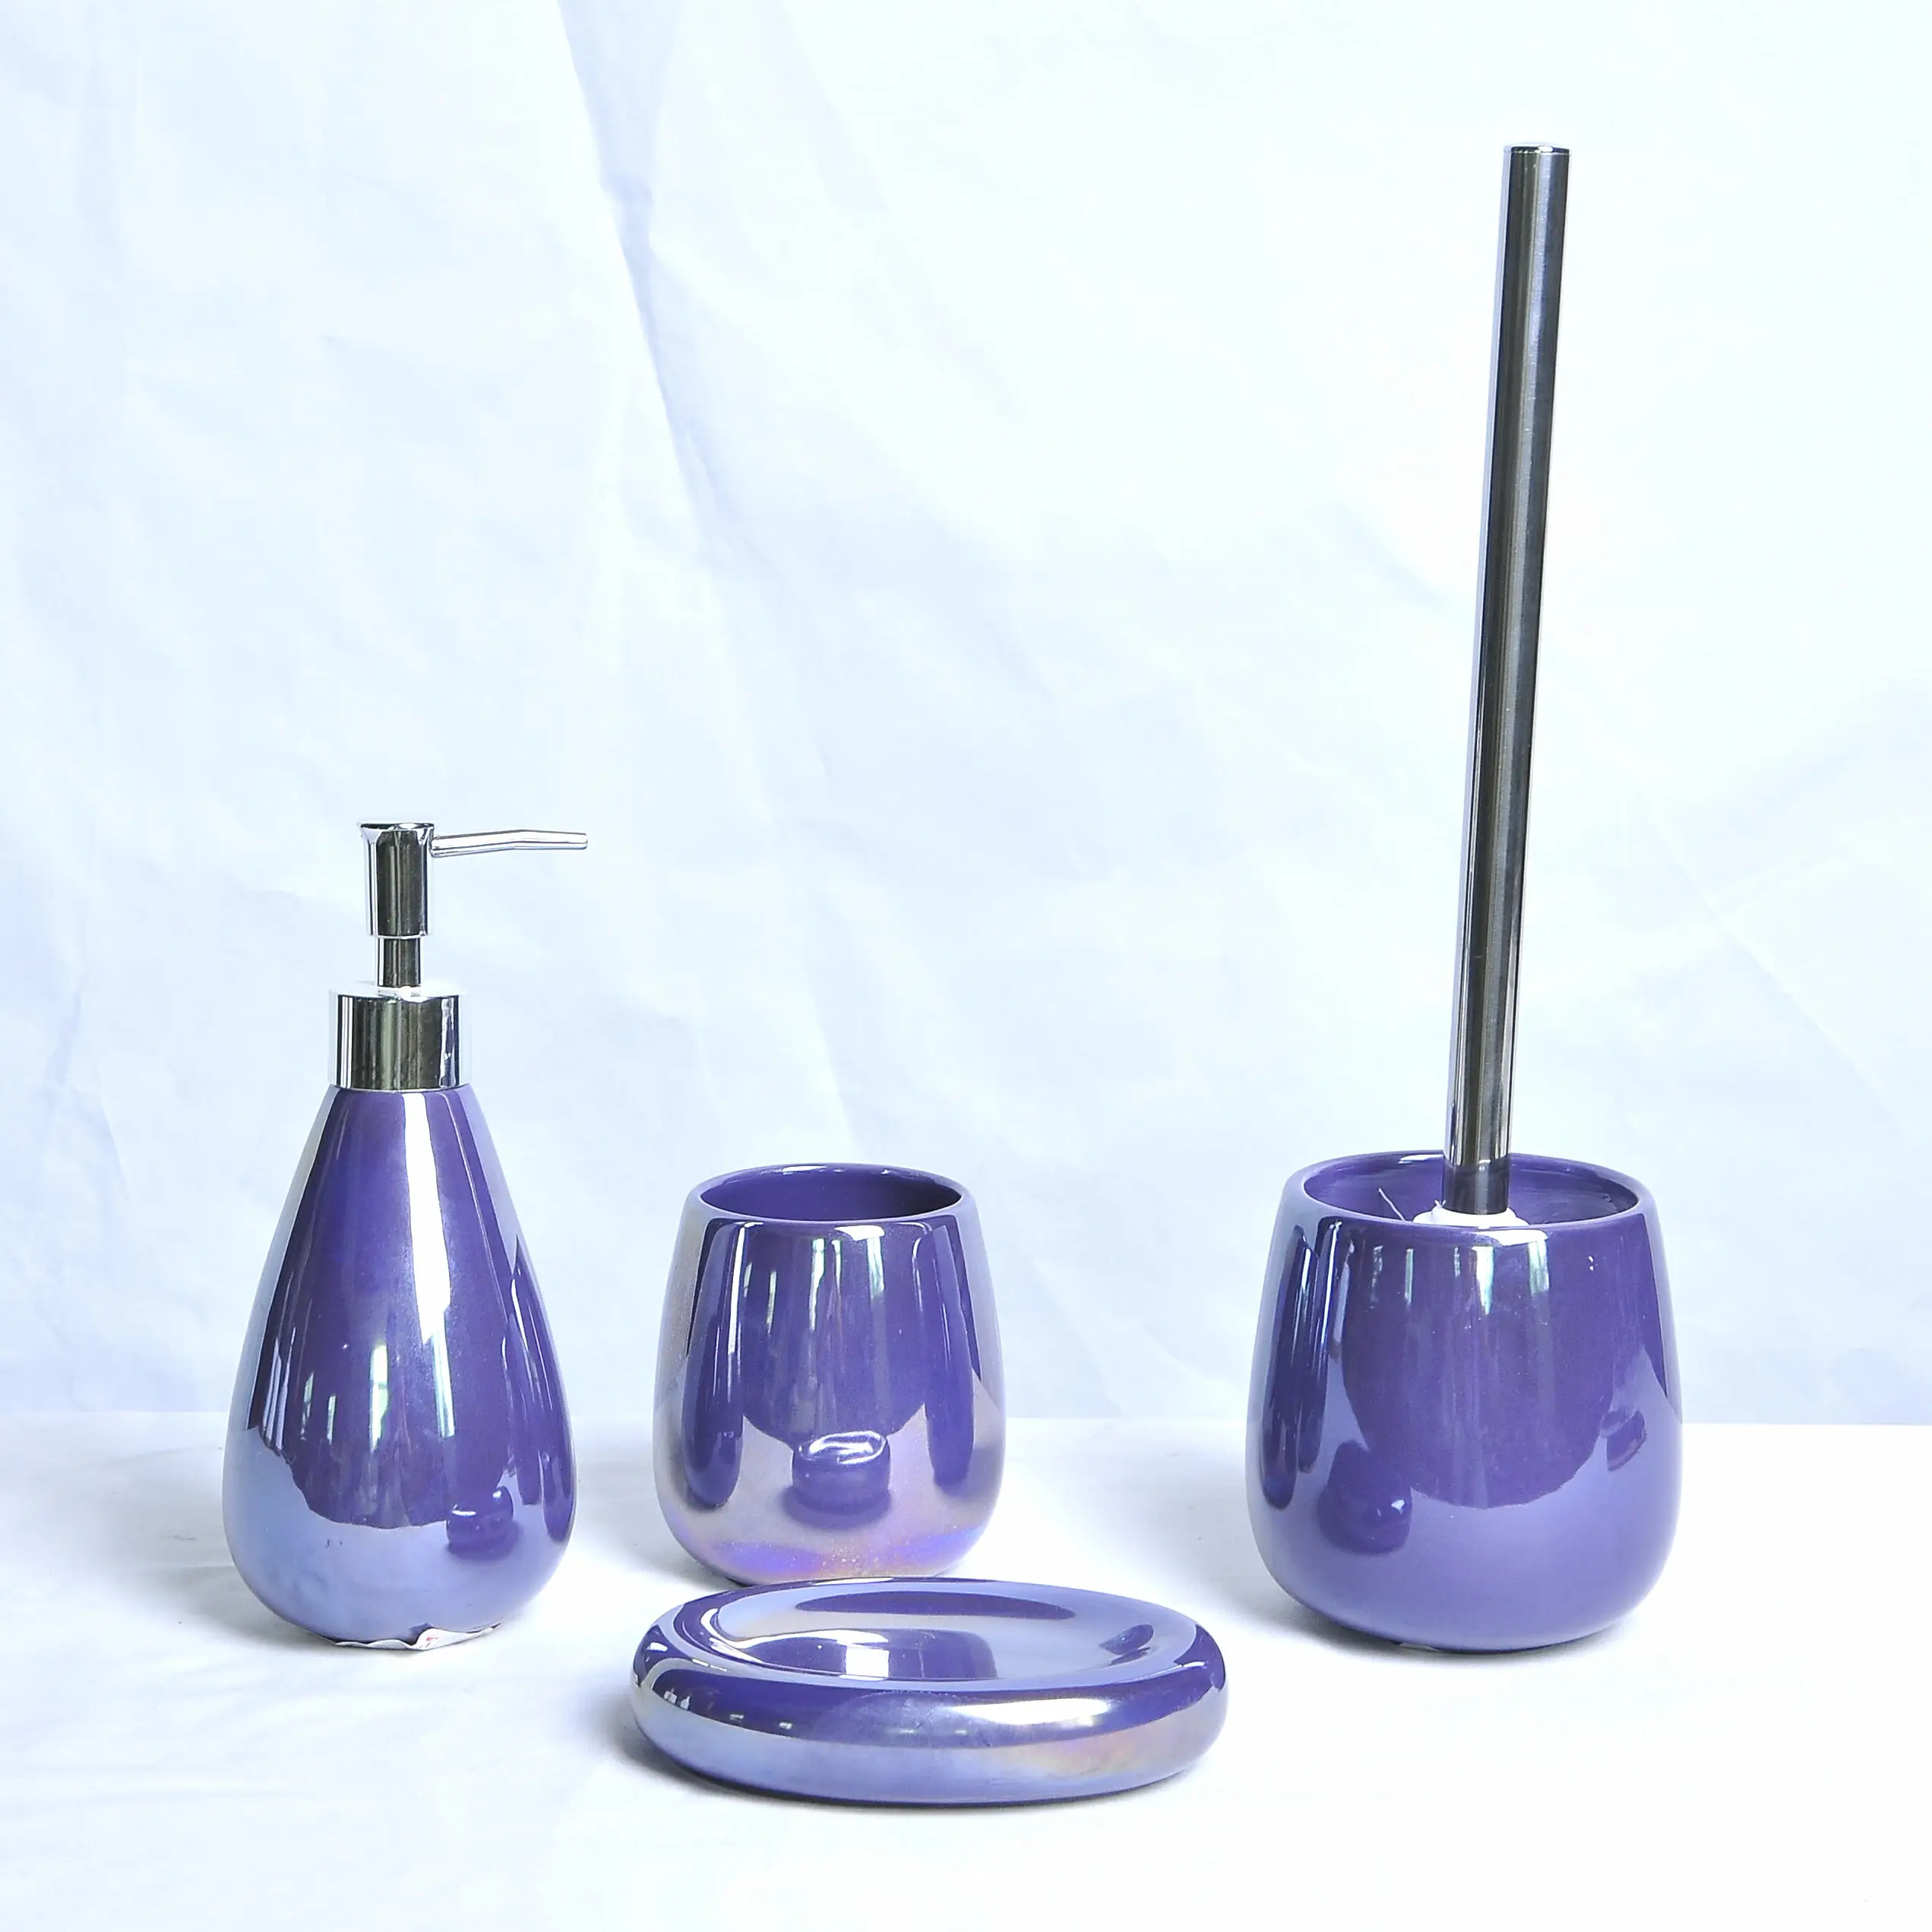 JIA SHUN 4pieces hotel bathroom products purple pearl glazed ceramic bathroom accessories set